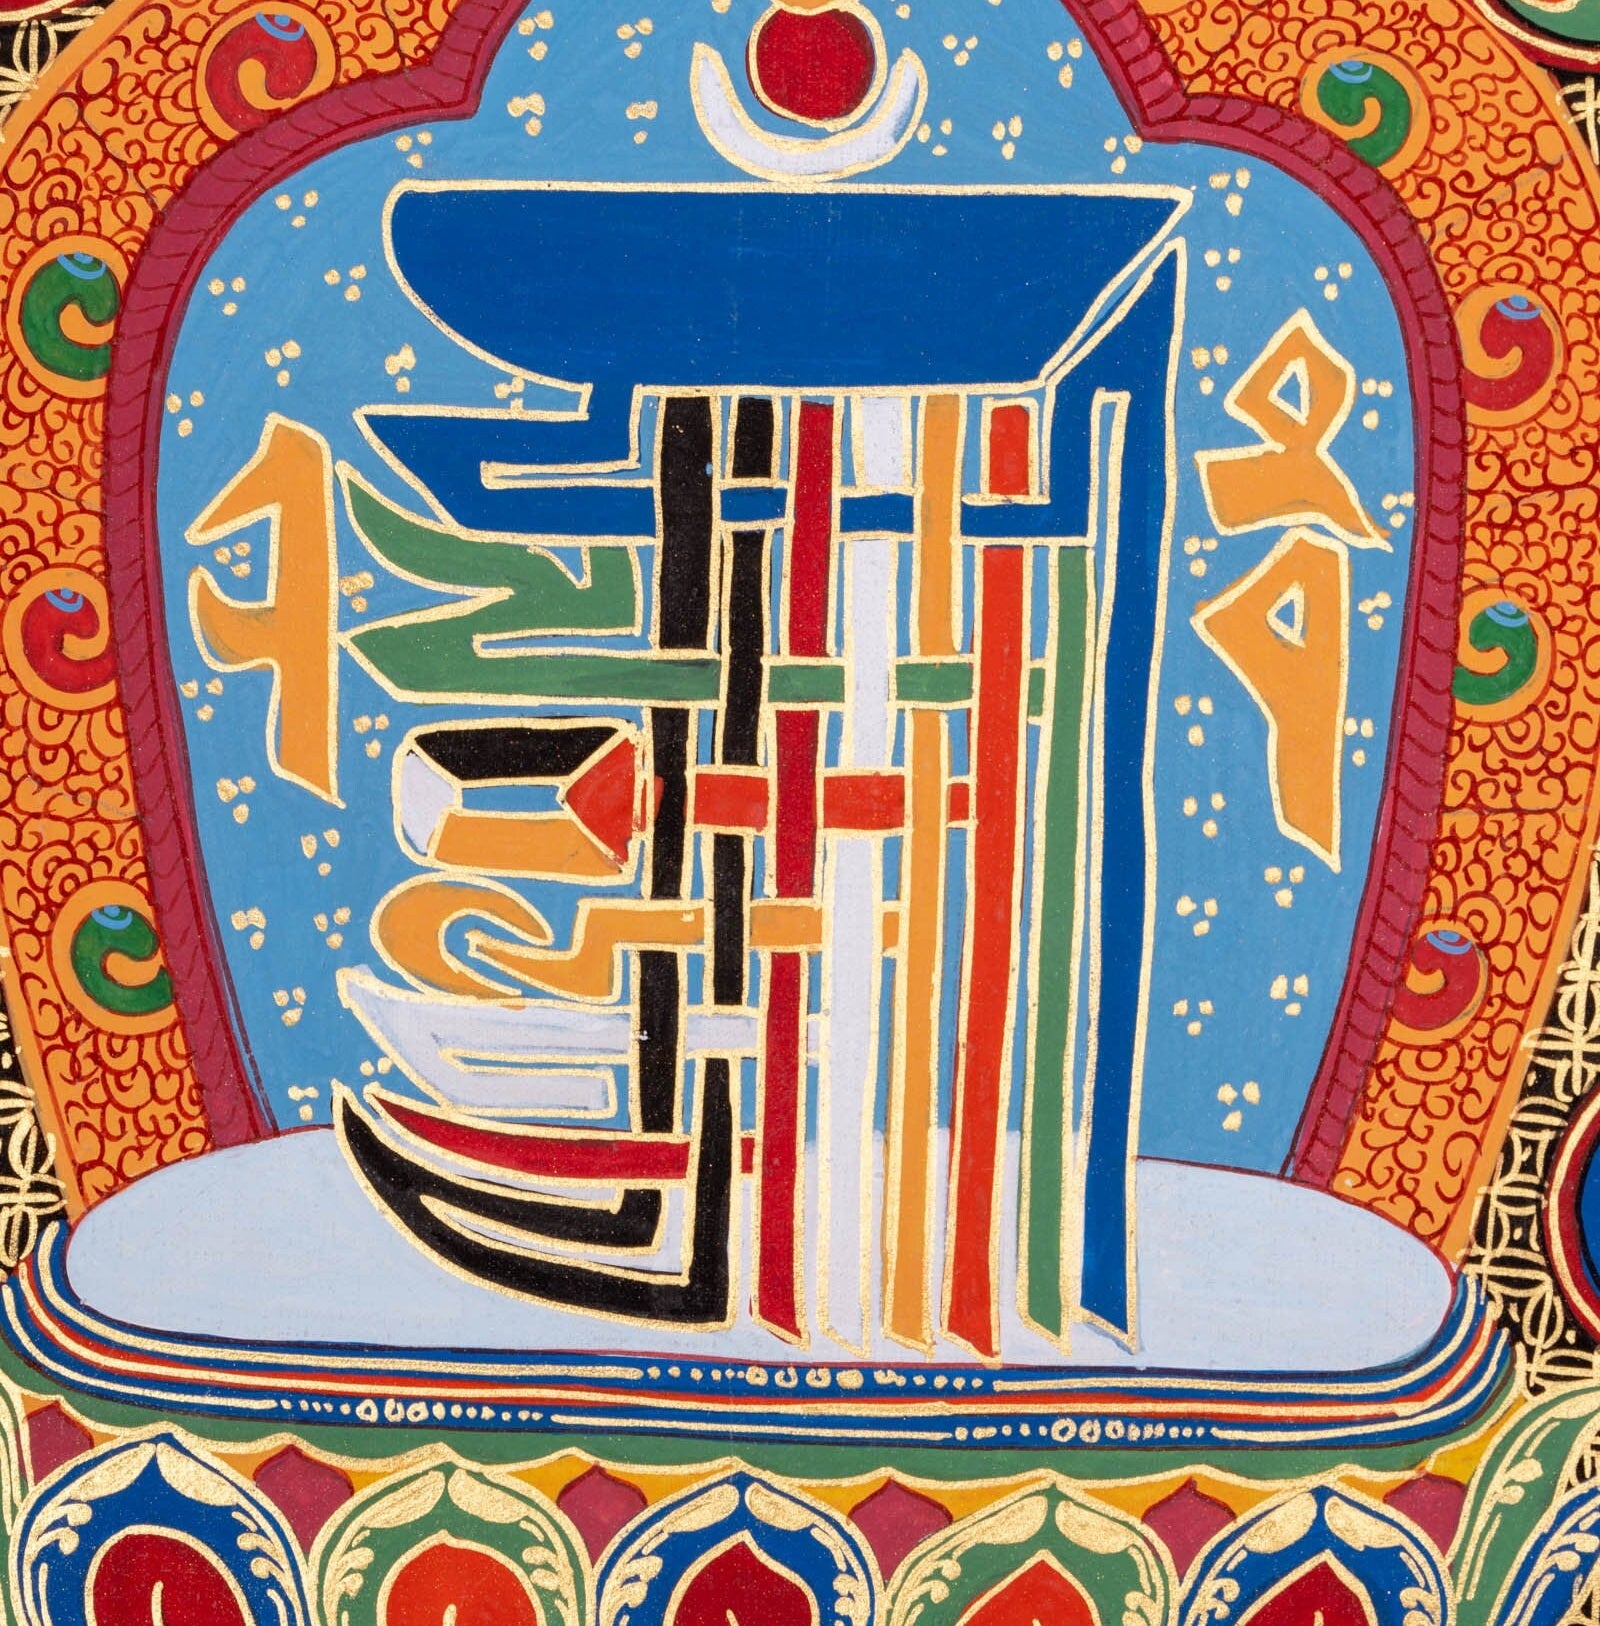 Thangka Painting of Kalchakra Mandala - Lucky Thanka